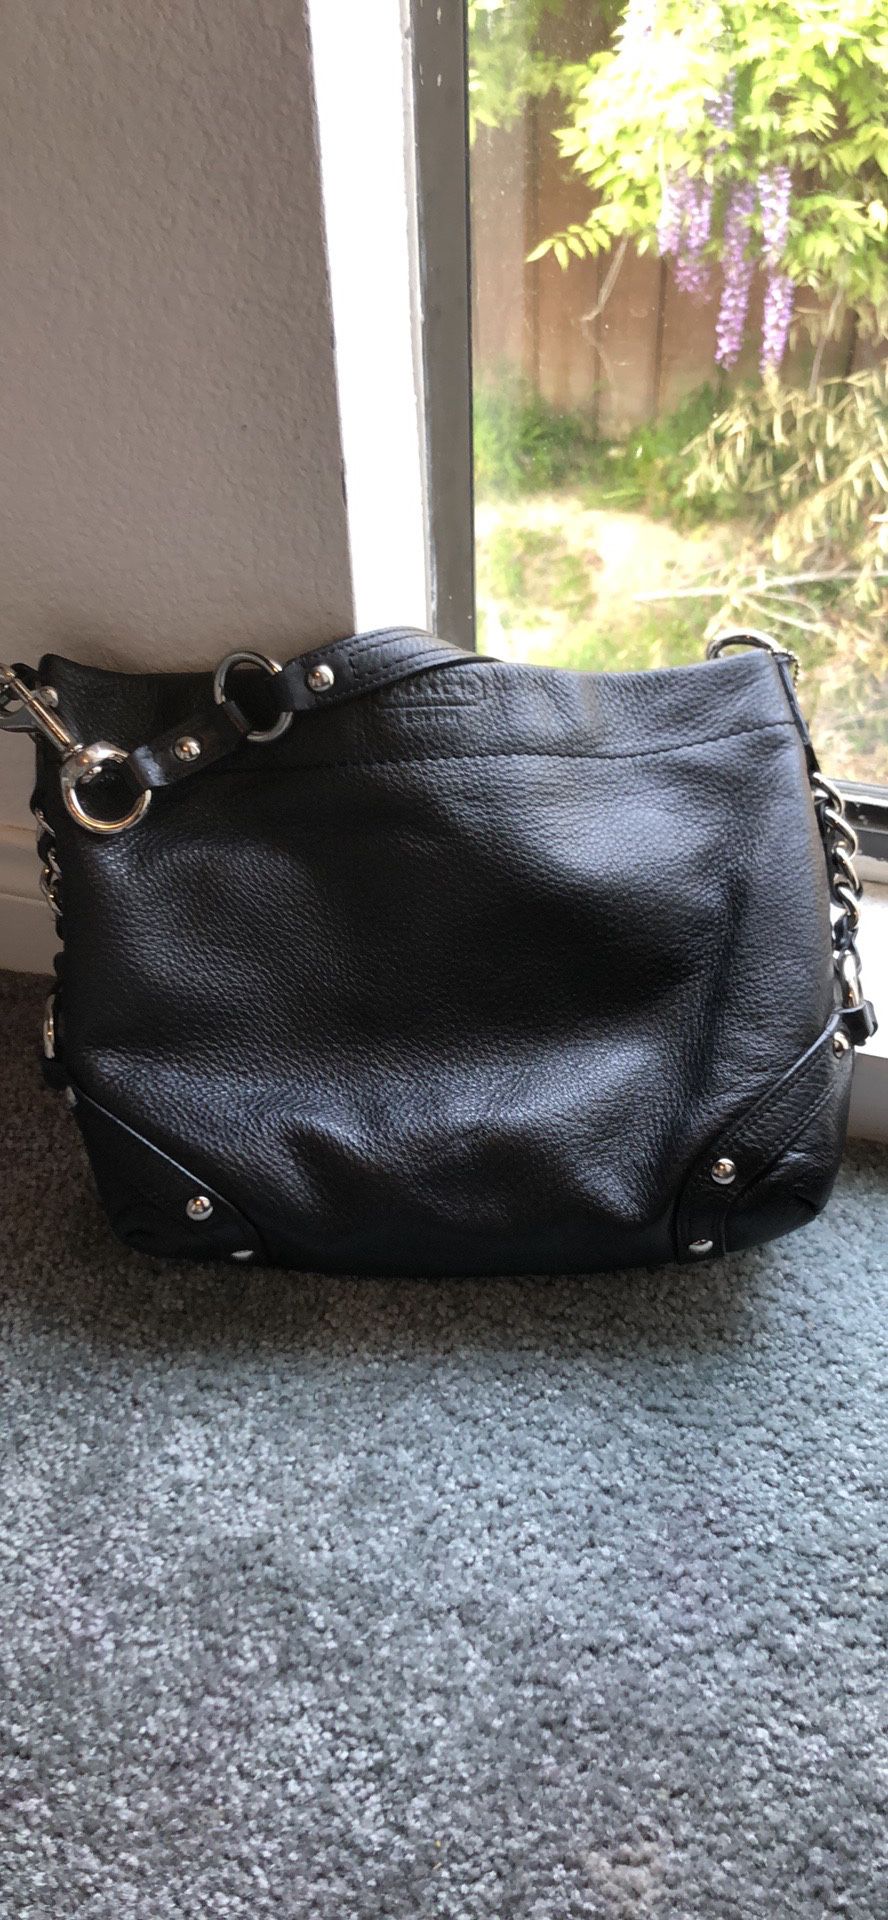 Leather COACH purse like NEW!!! Gorgeous purse, soft leather